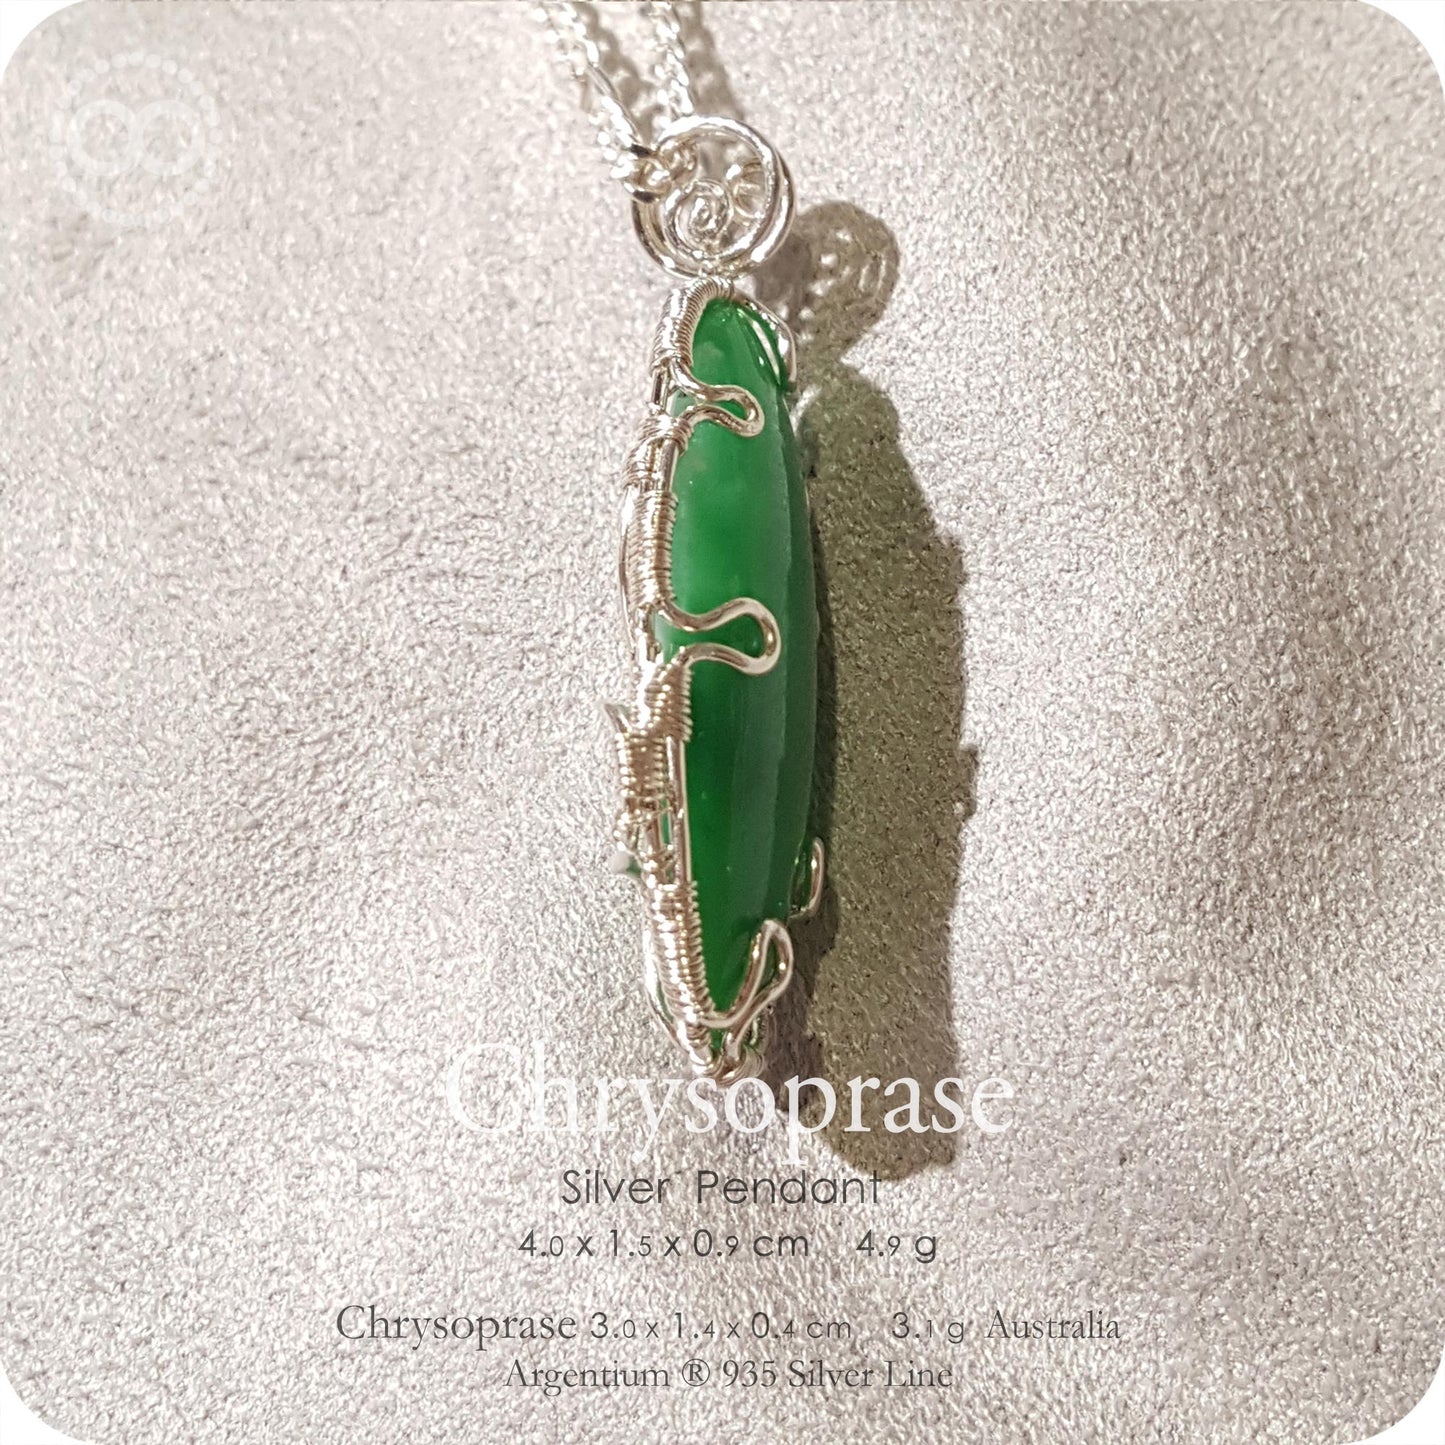 Chrysoprase 澳洲綠玉髓 Silver Necklace - H221